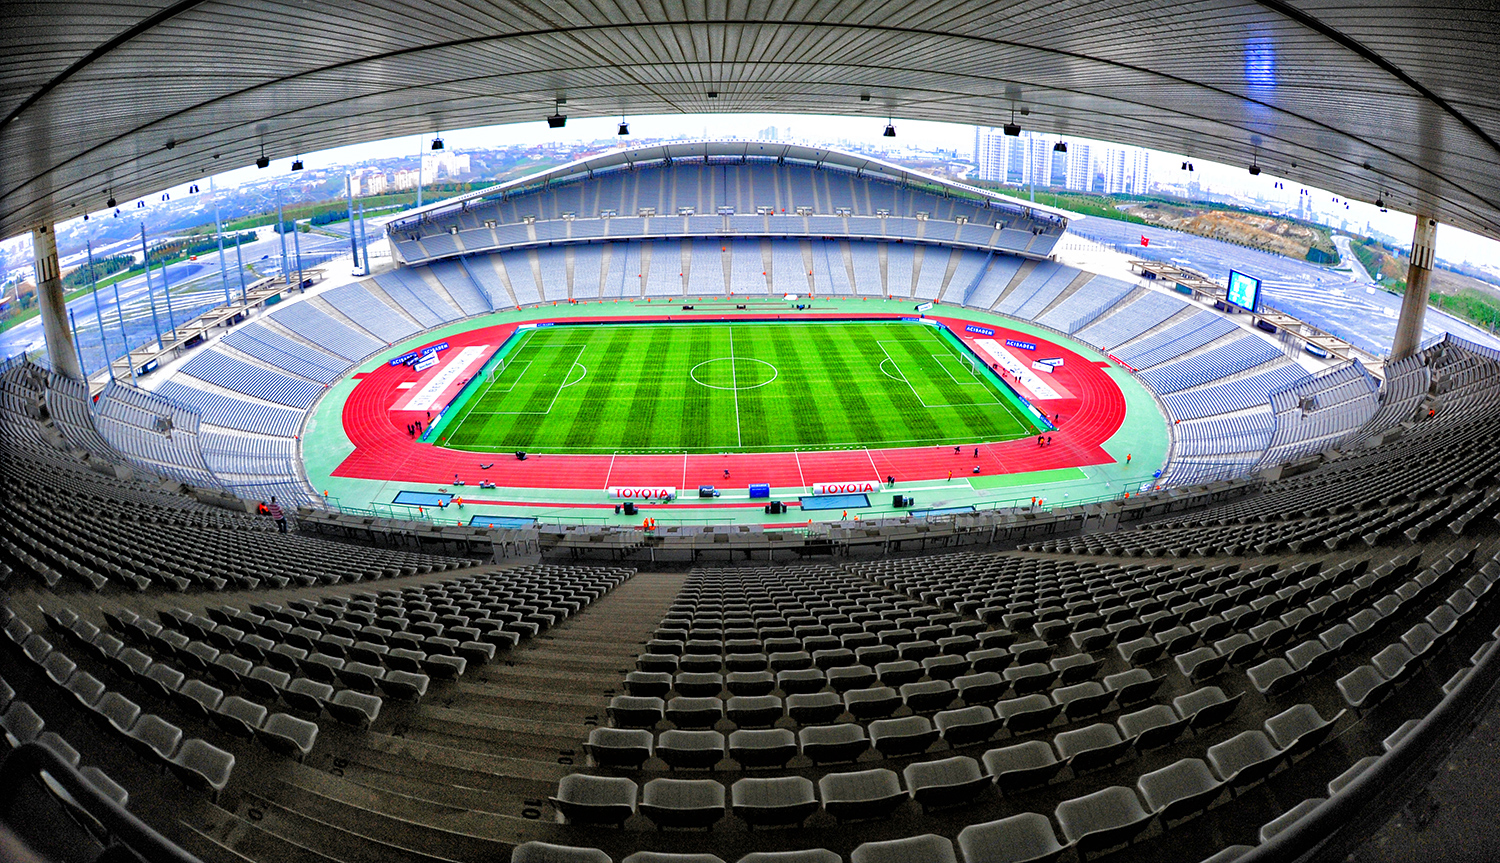 Atatürk Olympic Stadium - Simple English Wikipedia, the free encyclopedia